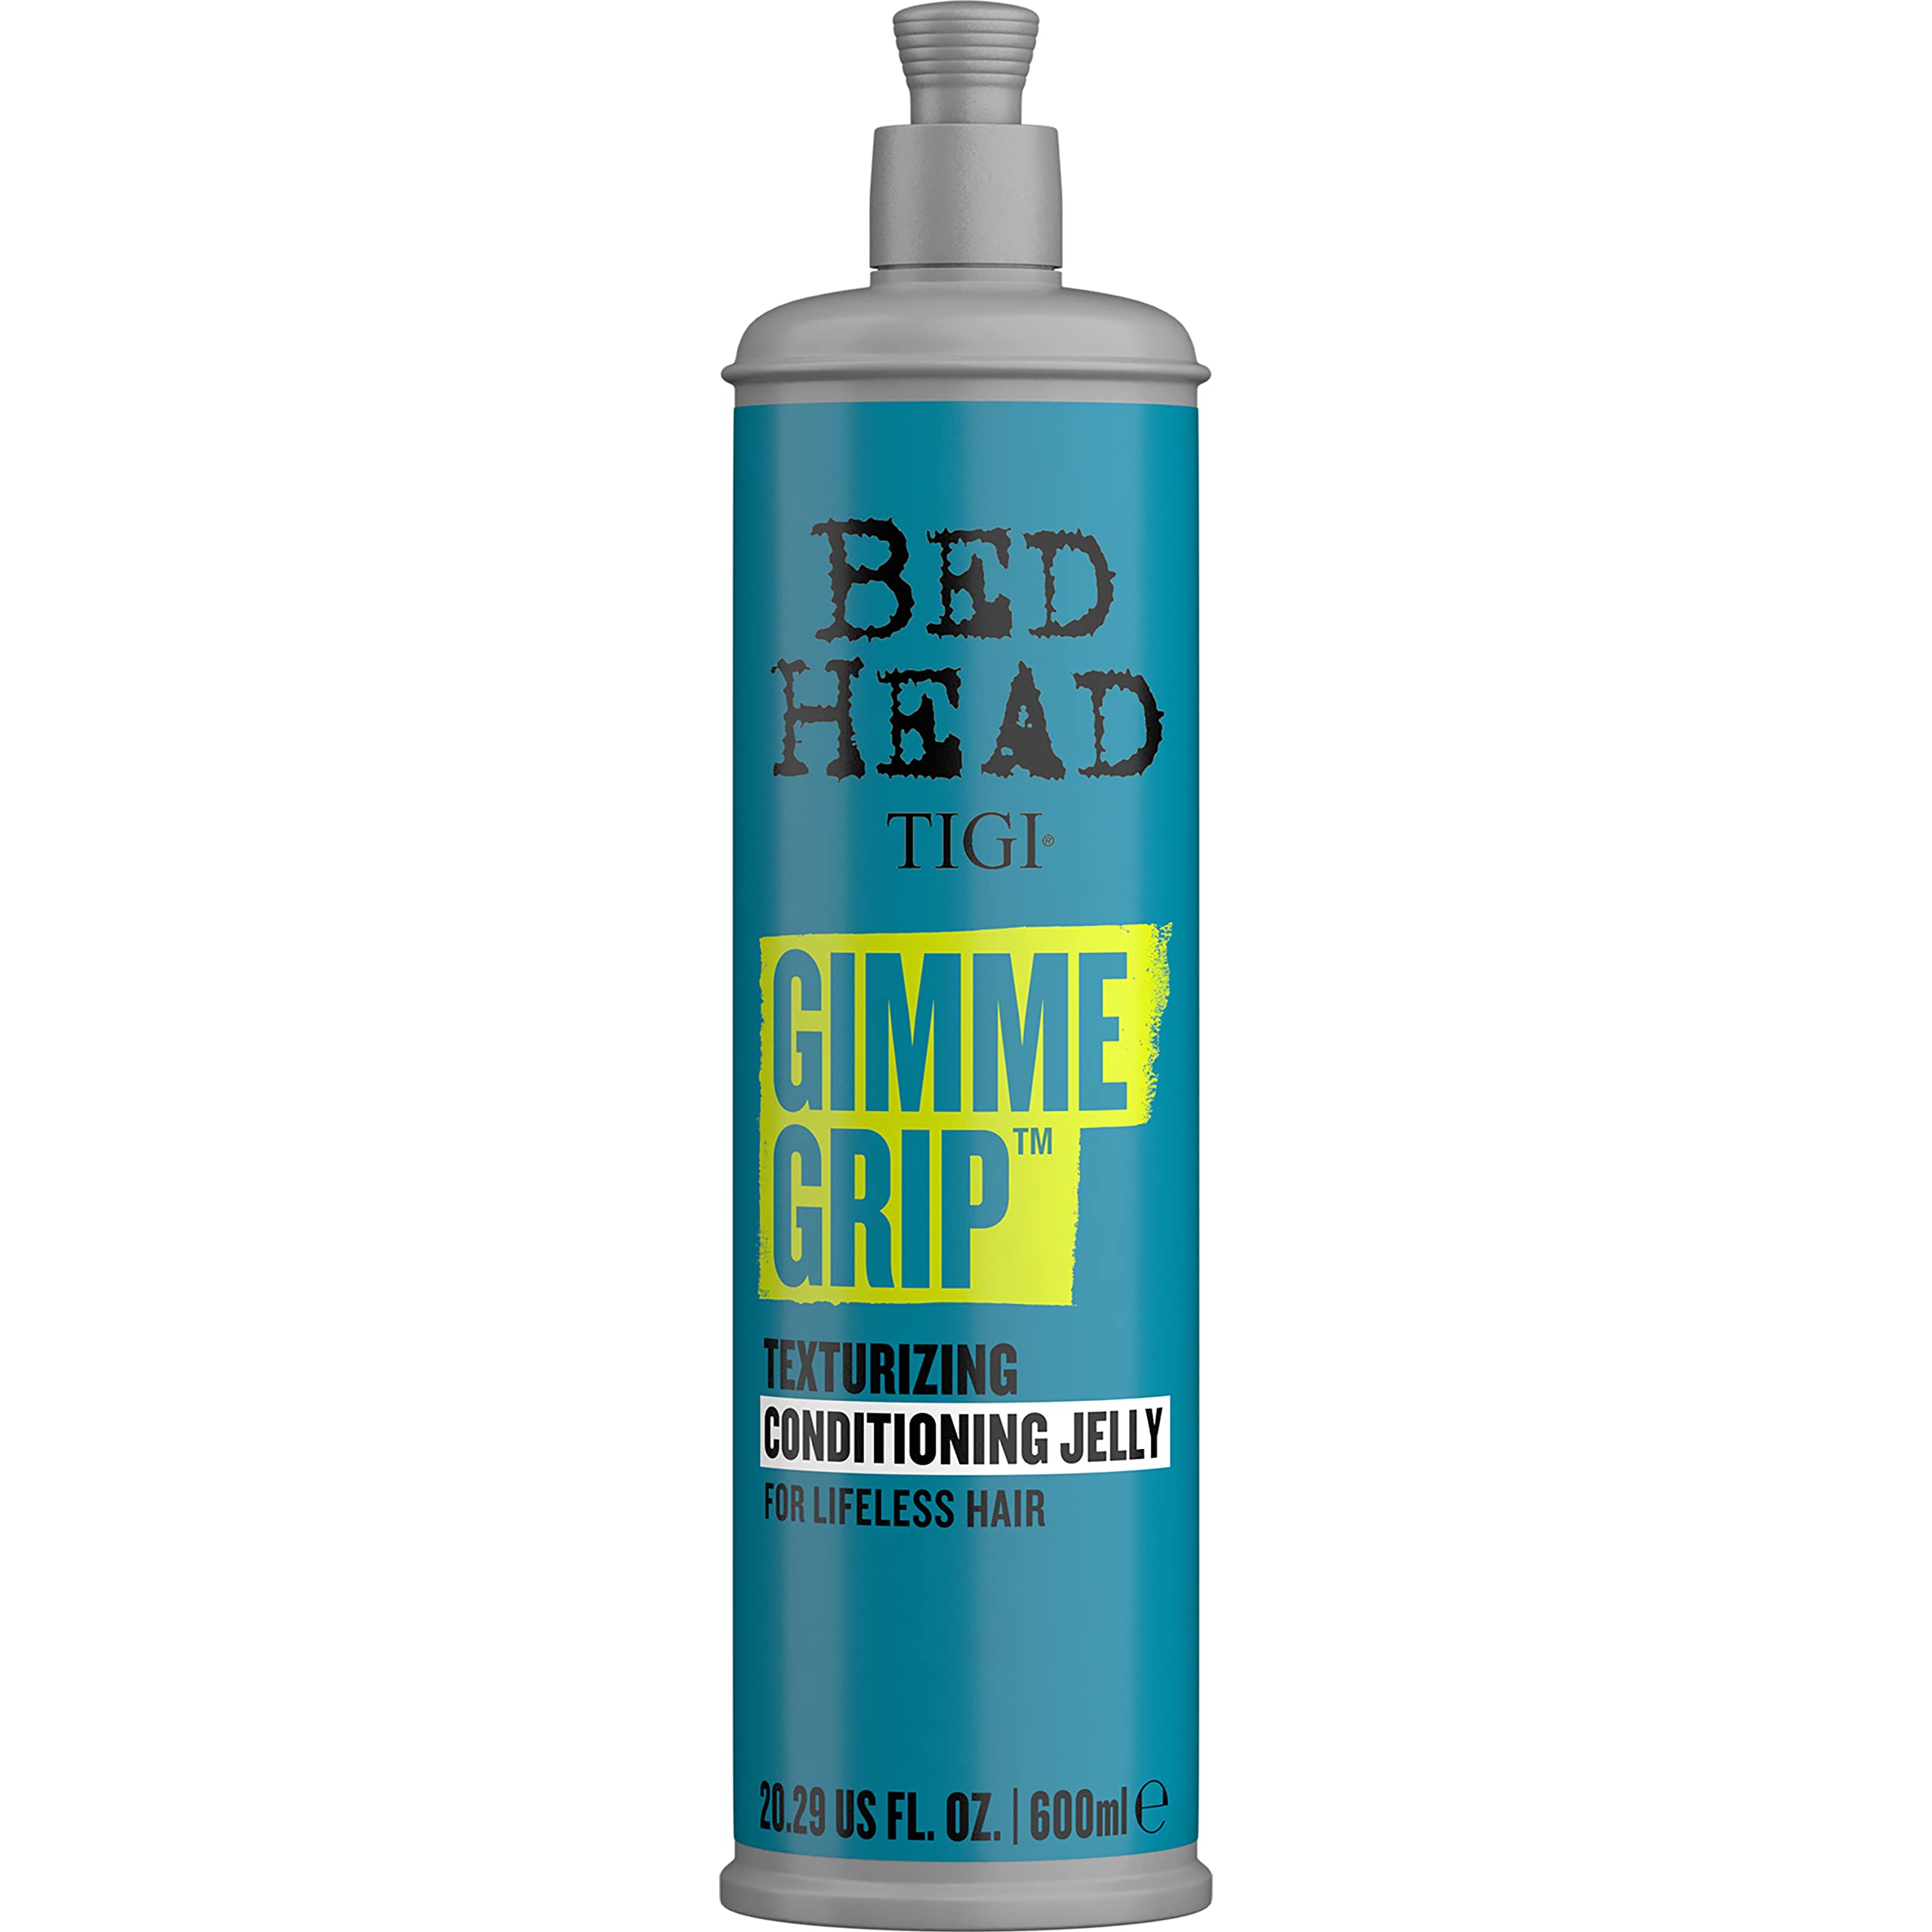 TIGI Bed Head Gimme Grip Texturizing Conditioner for Hair Texture 20.29 fl oz